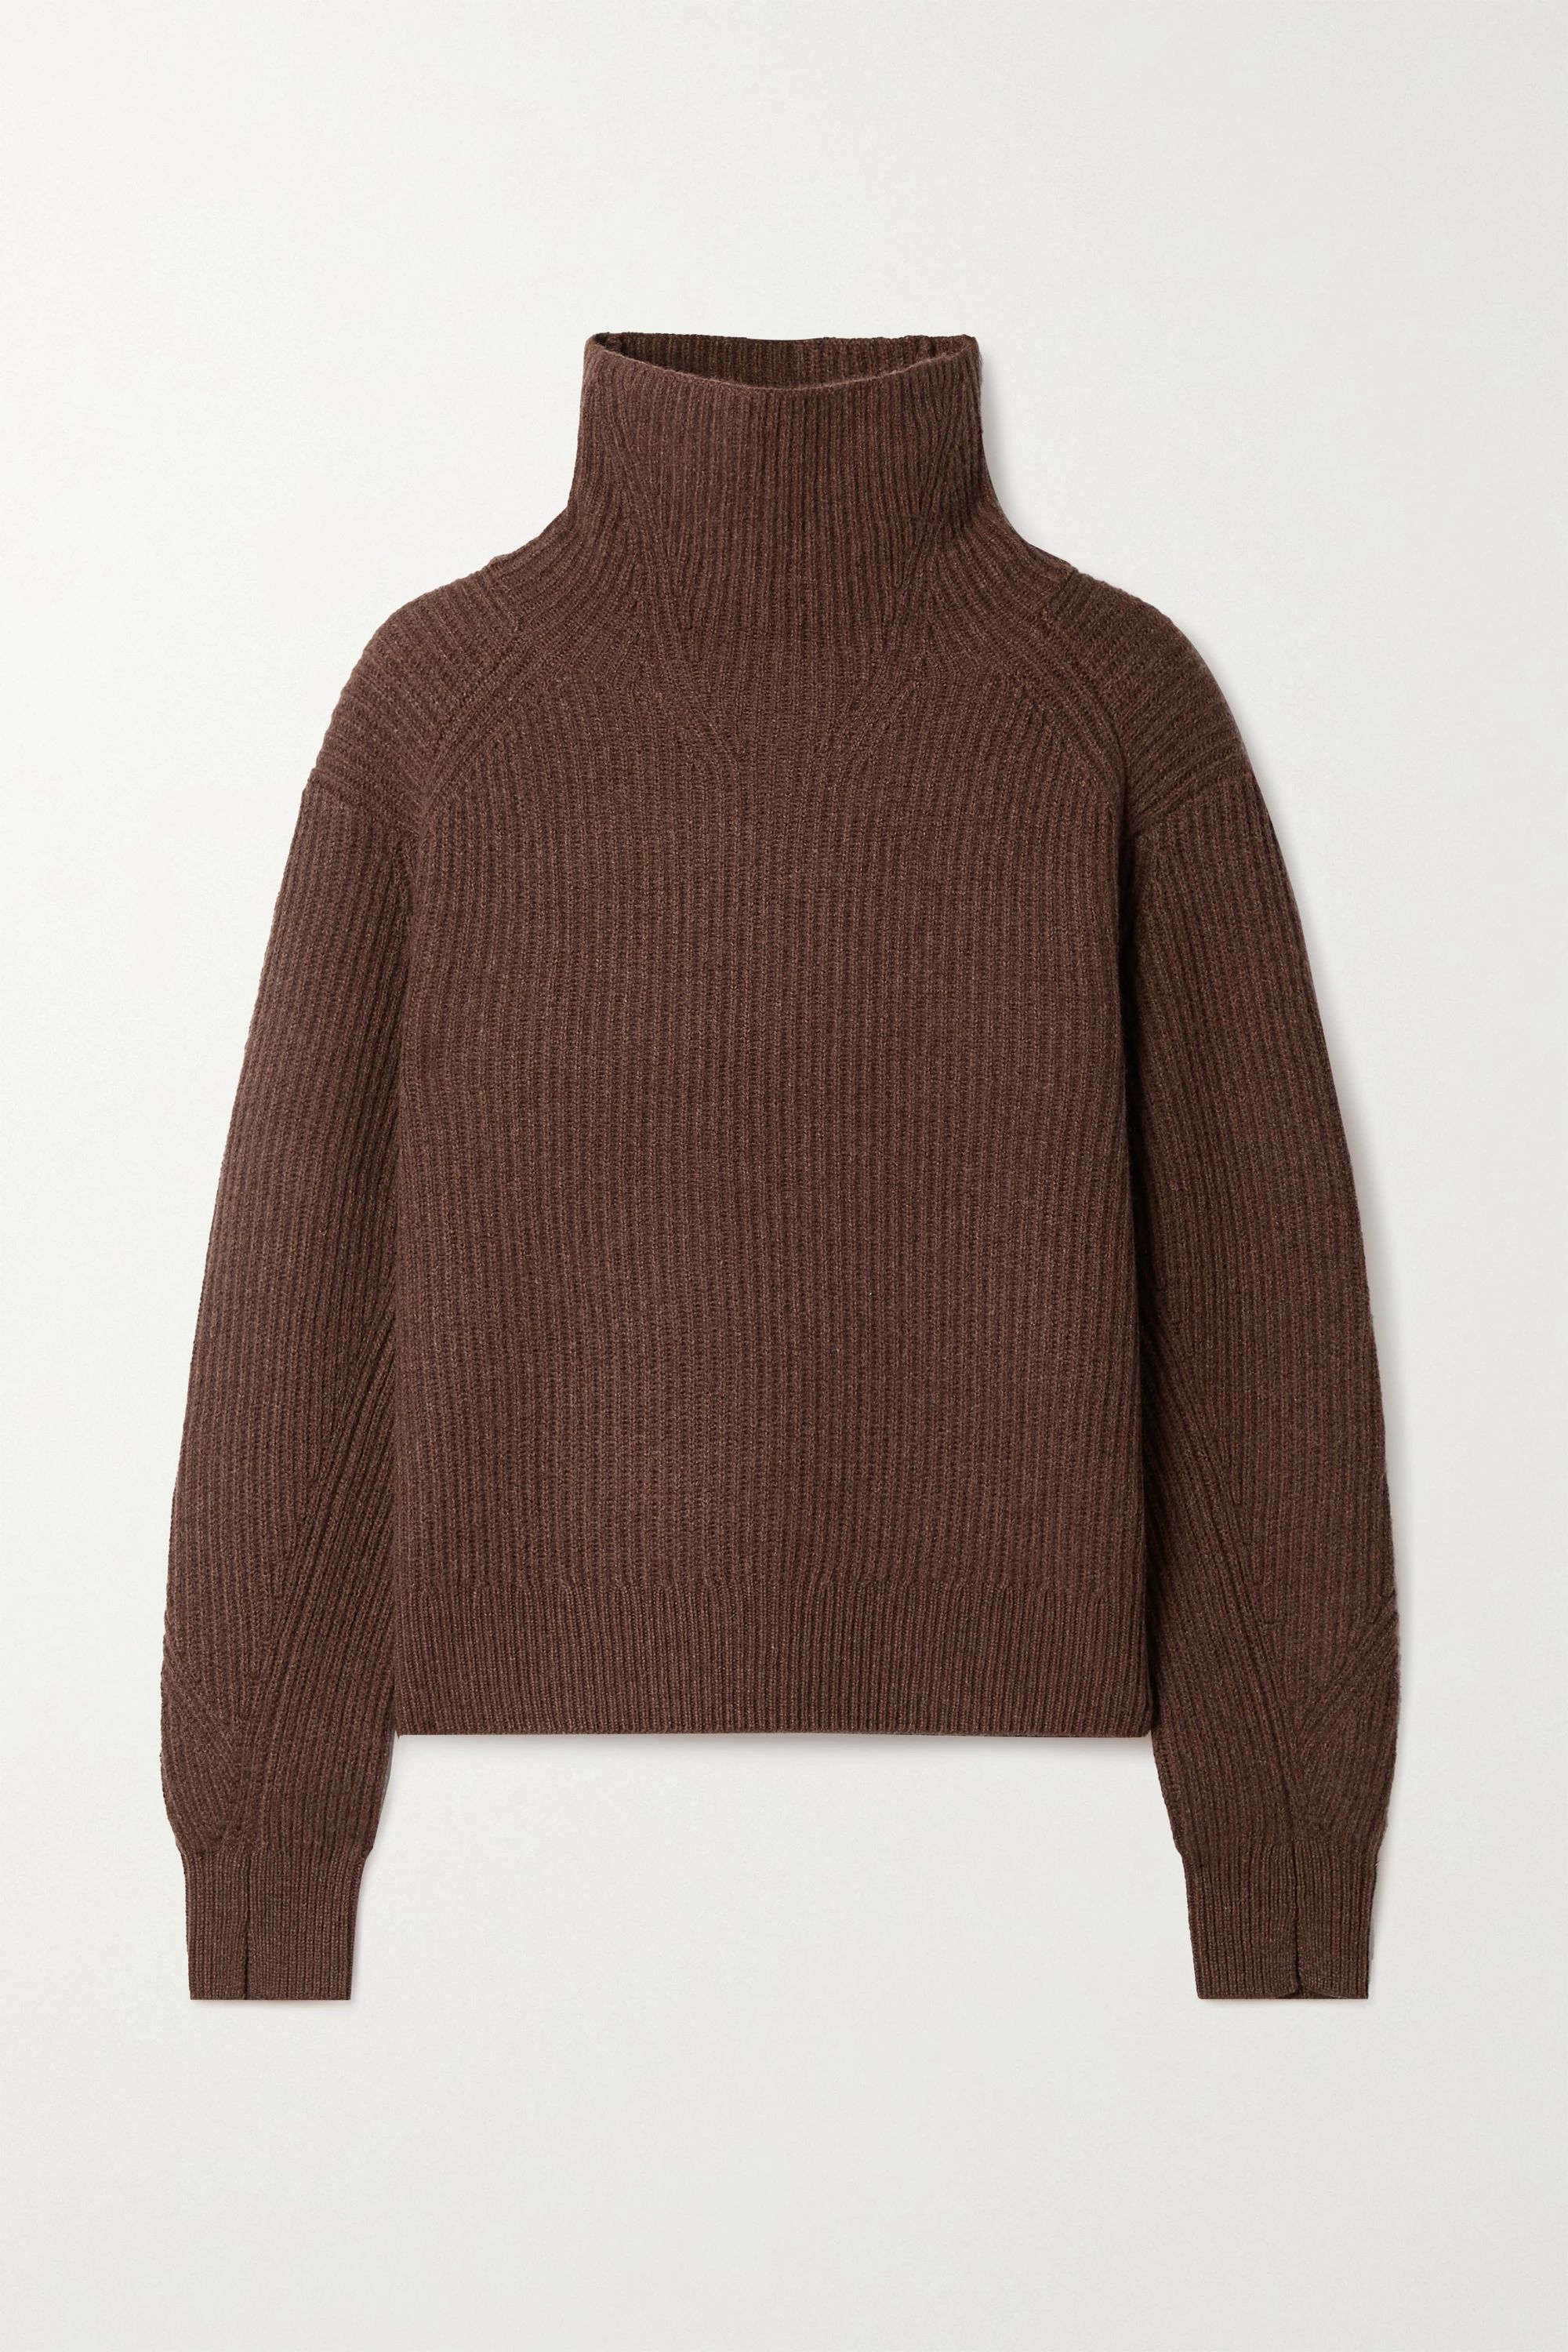 Chocolate Pierce ribbed cashmere turtleneck sweater | rag & bone | NET-A-PORTER | NET-A-PORTER (US)